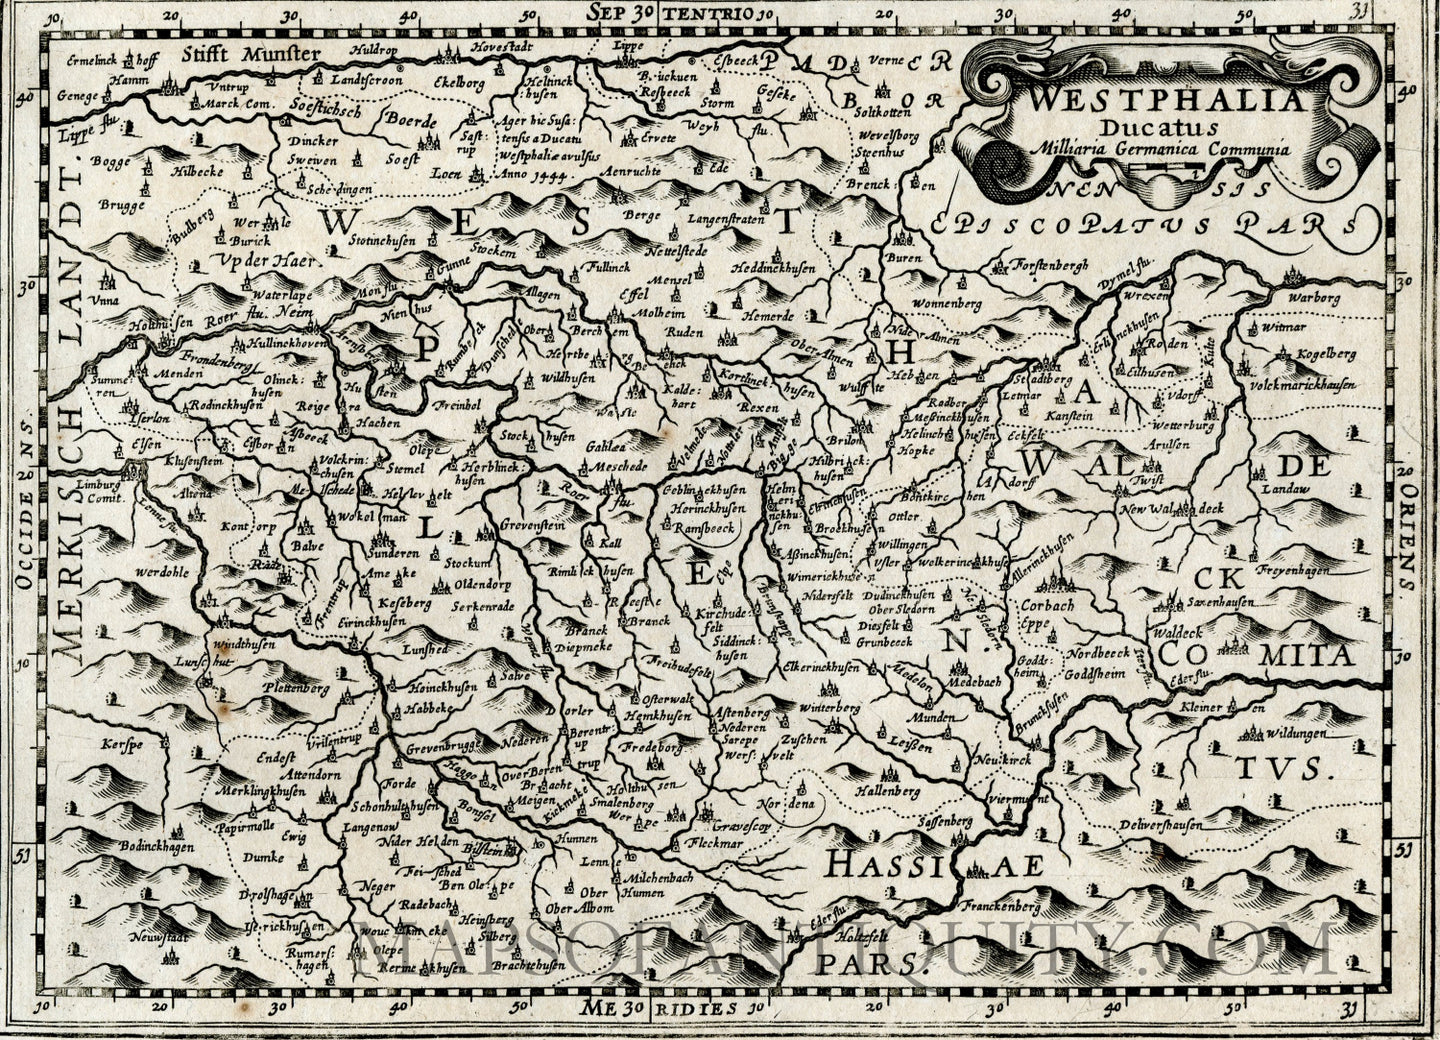 Black-and-white-antique-map-Westphalia-Ducatus-Duchy-of-Westphalia-Germany-Europe-Germany-1632-Mercator-Maps-Of-Antiquity